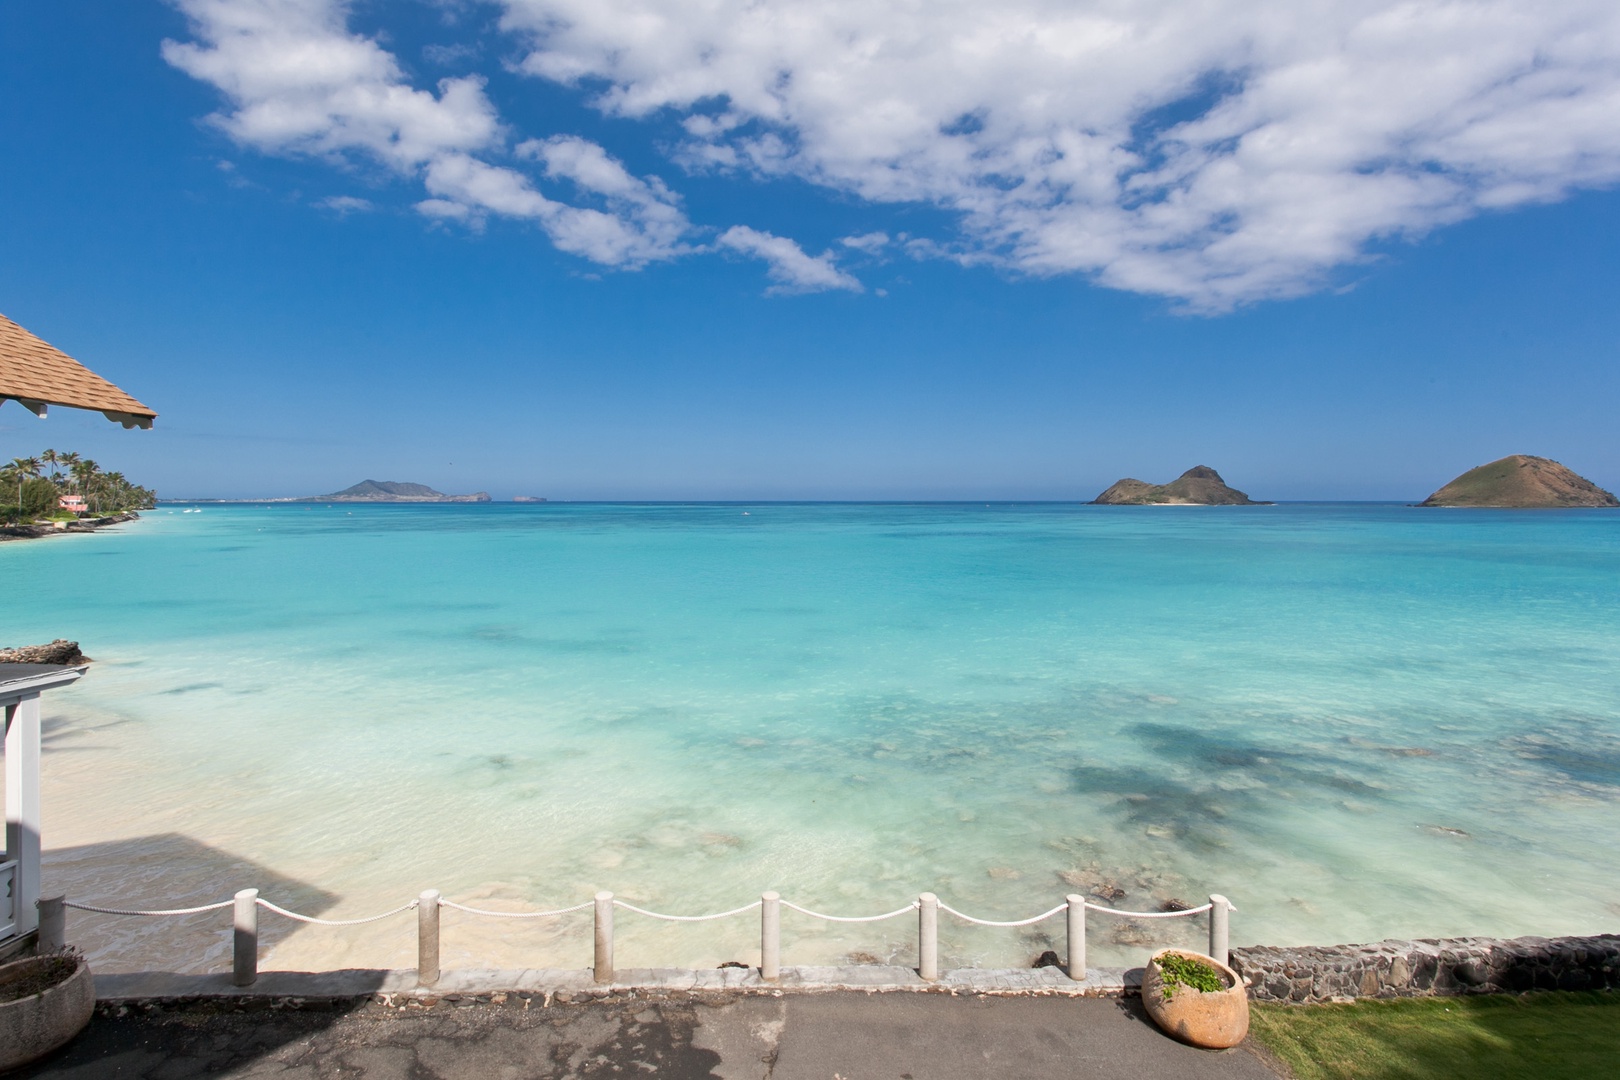 Kailua Vacation Rentals, Hale Mahina Lanikai* - An idyllic spot for sunbathers and swimmers alike.